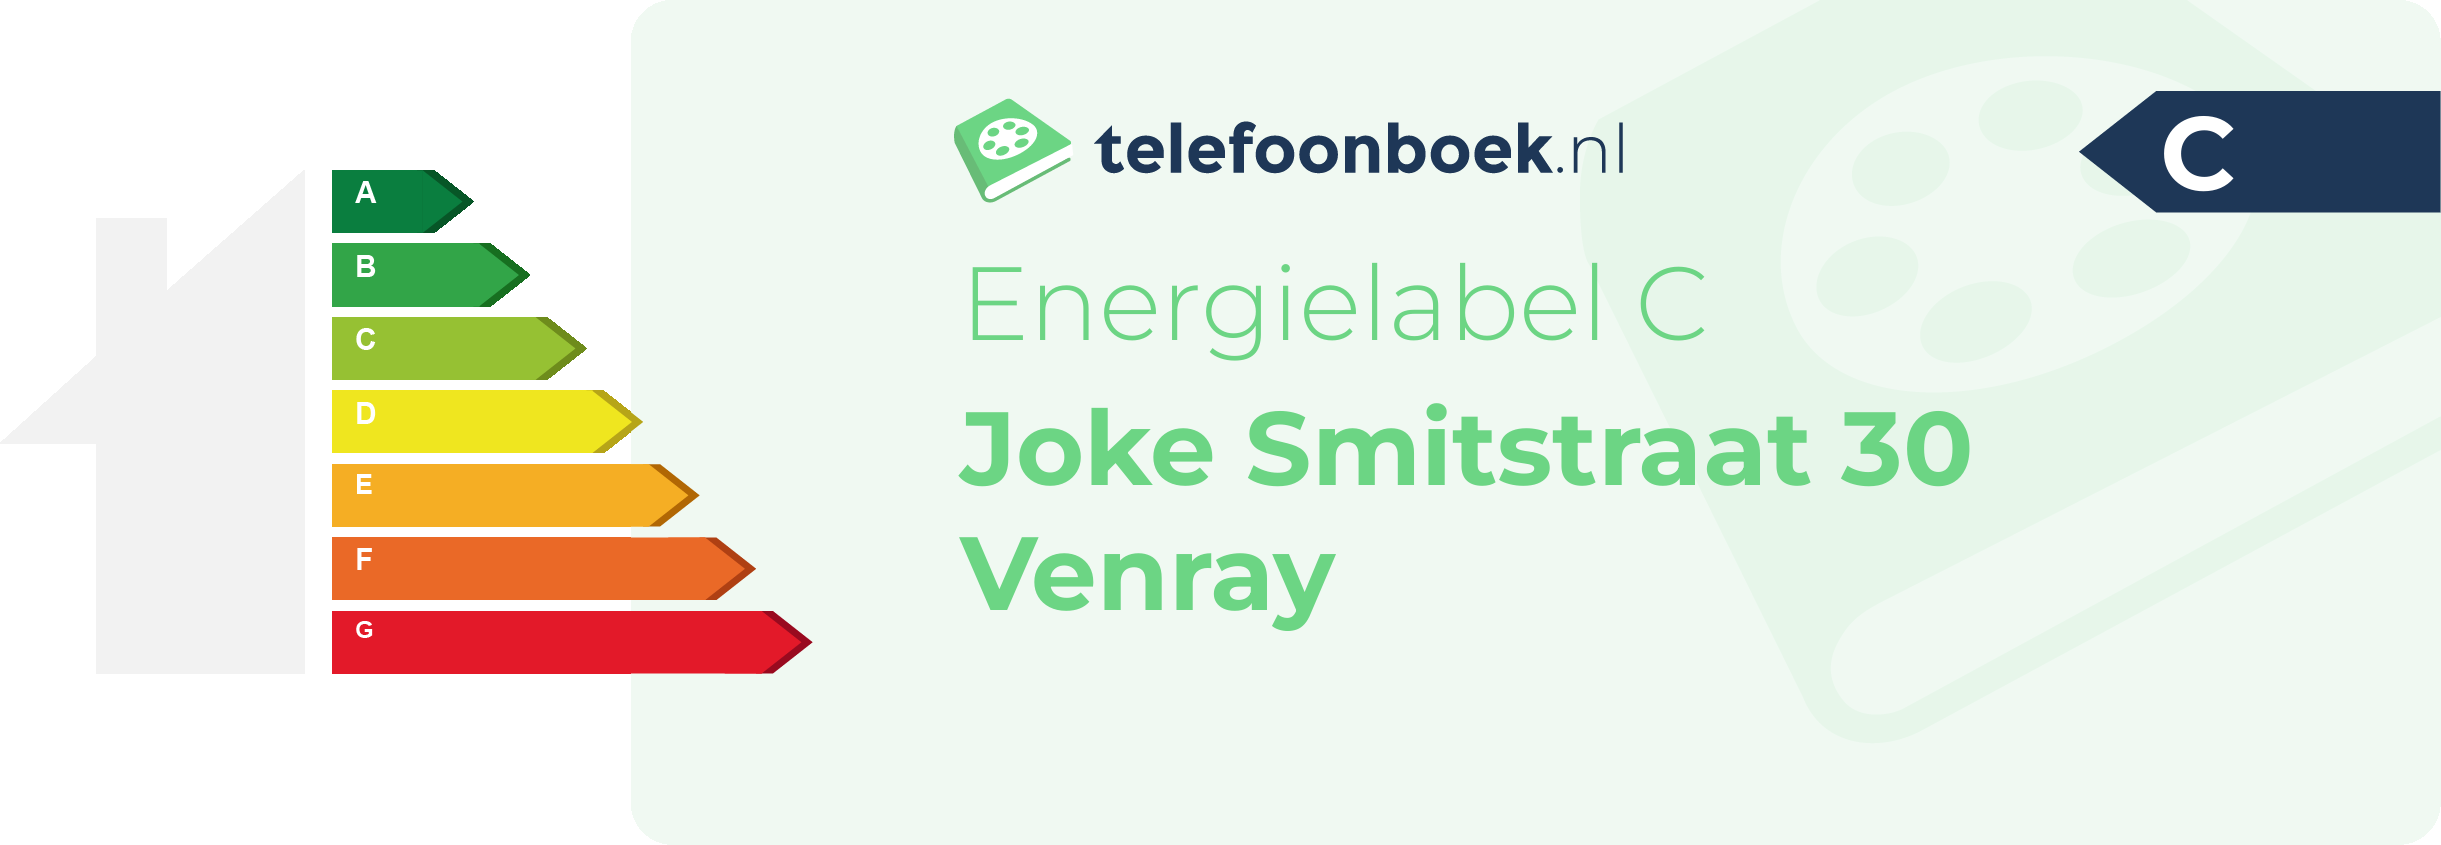 Energielabel Joke Smitstraat 30 Venray